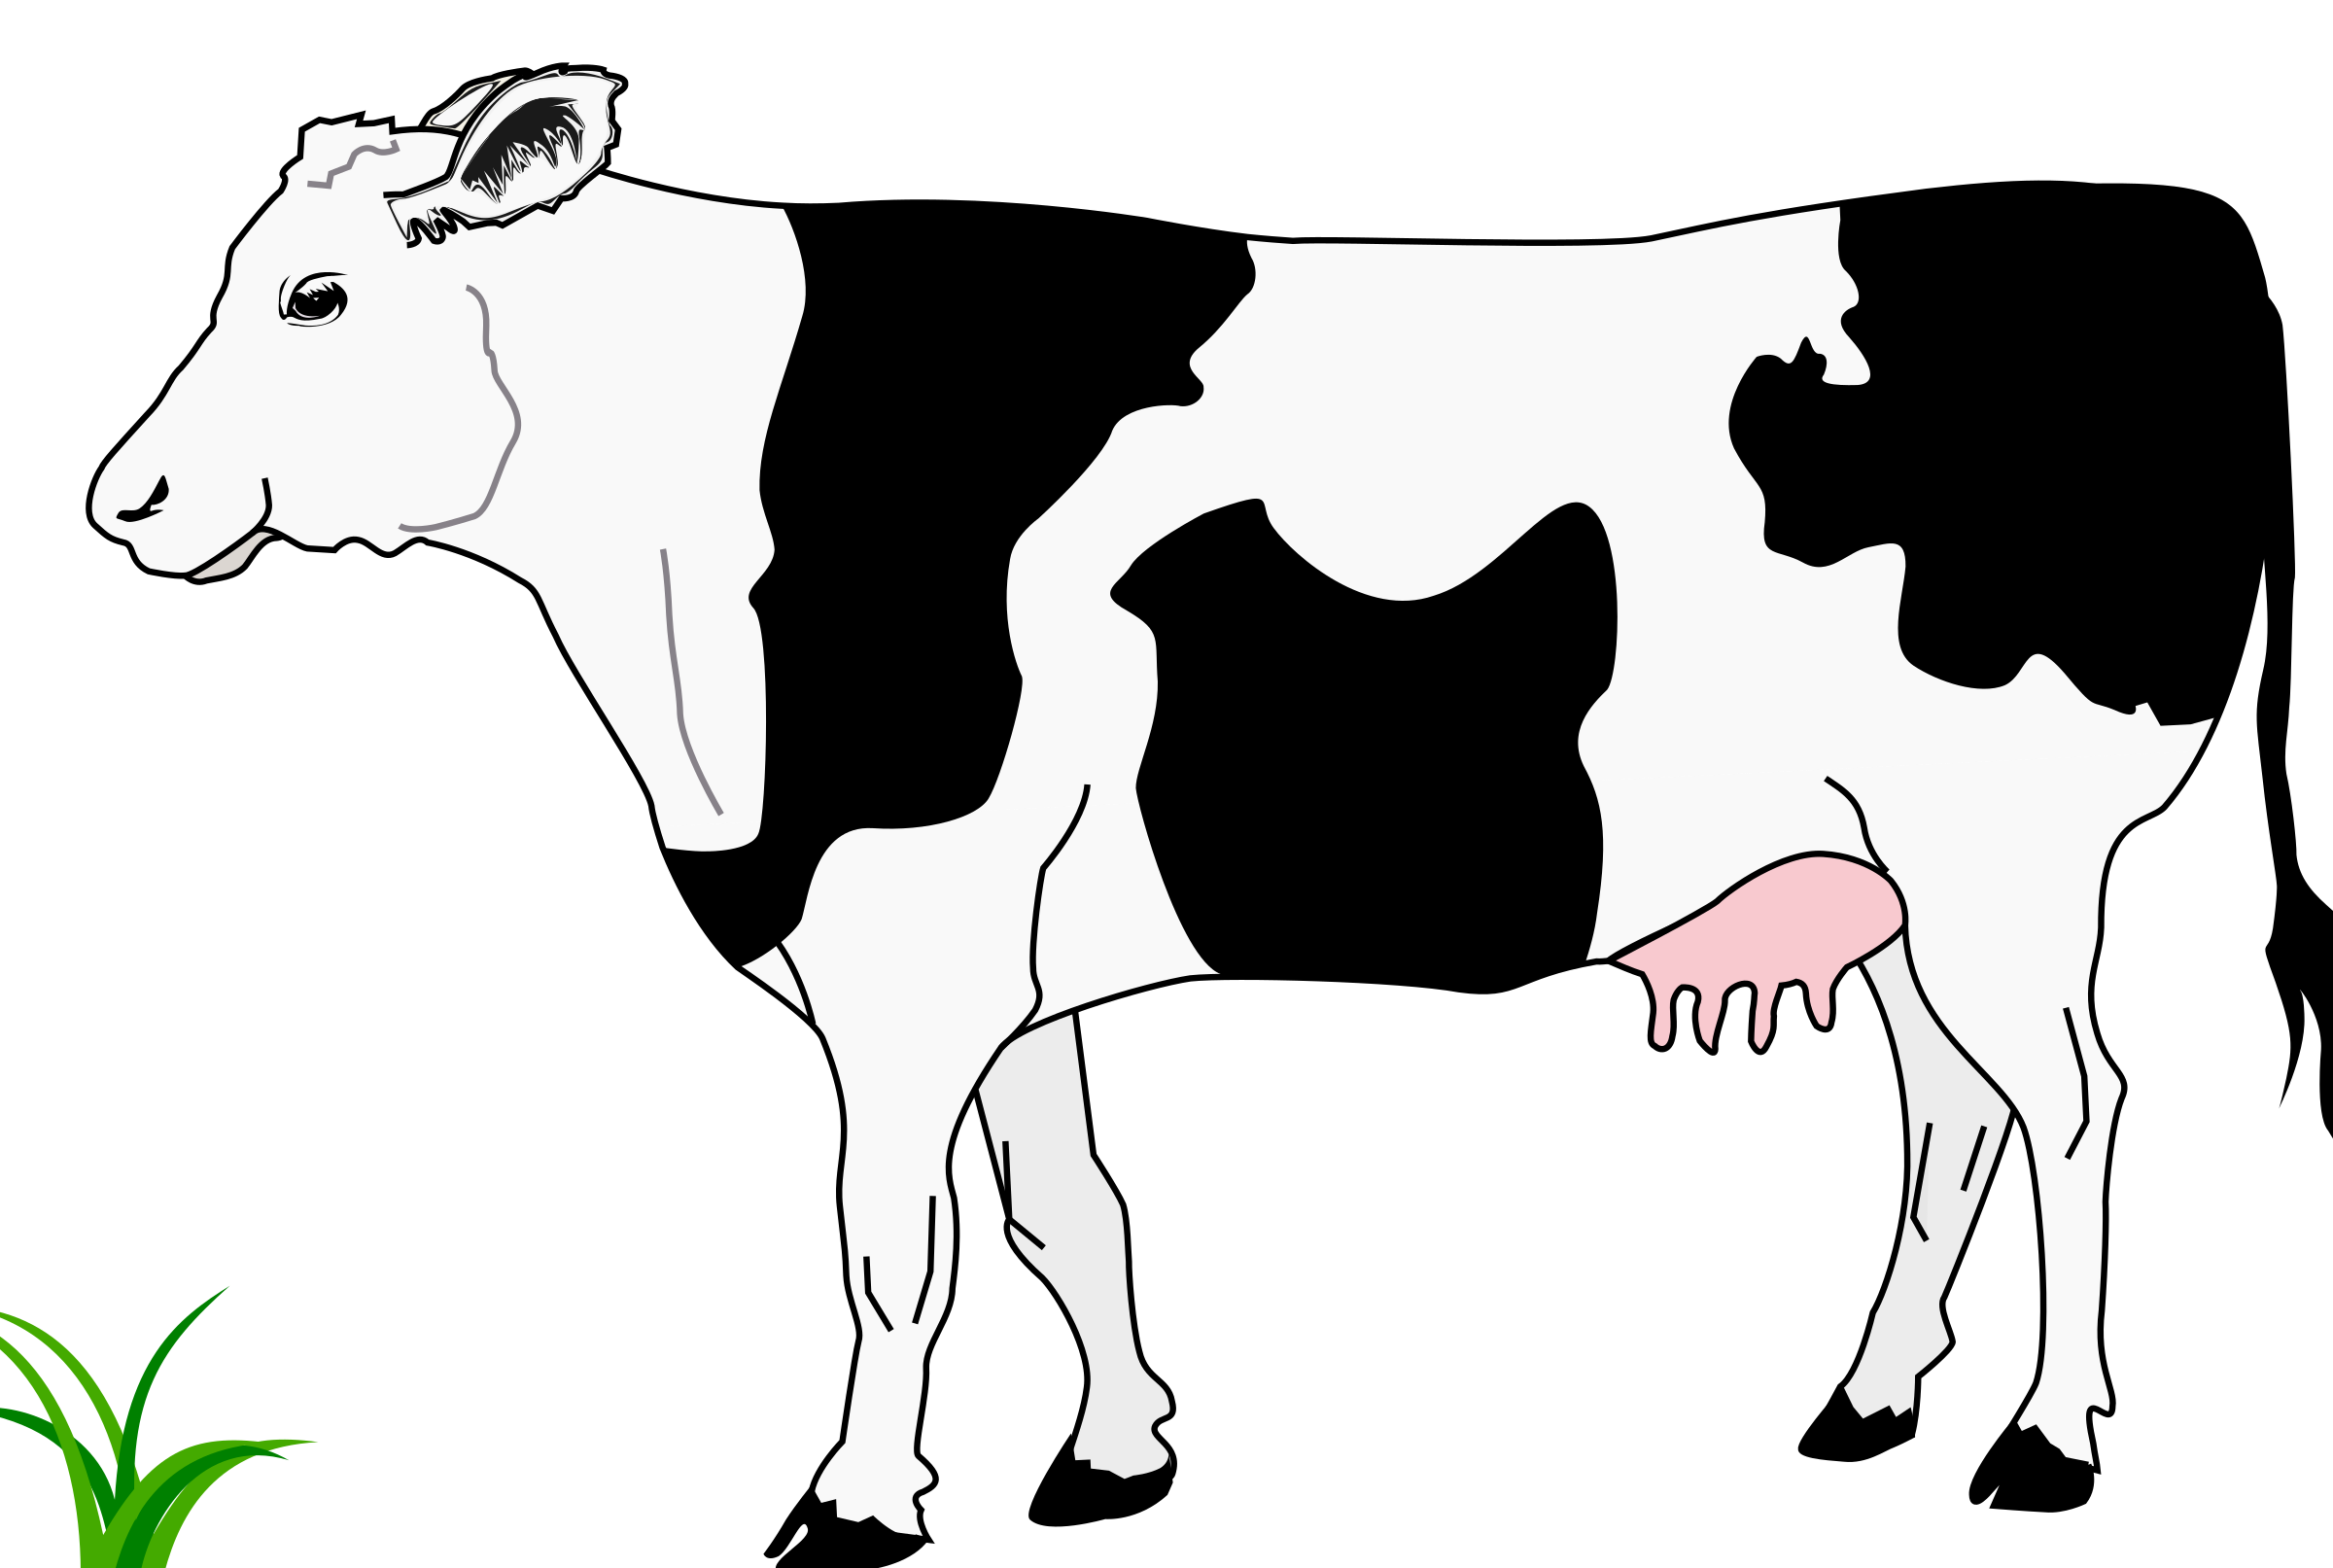 Cow Head PNG HD - 140182